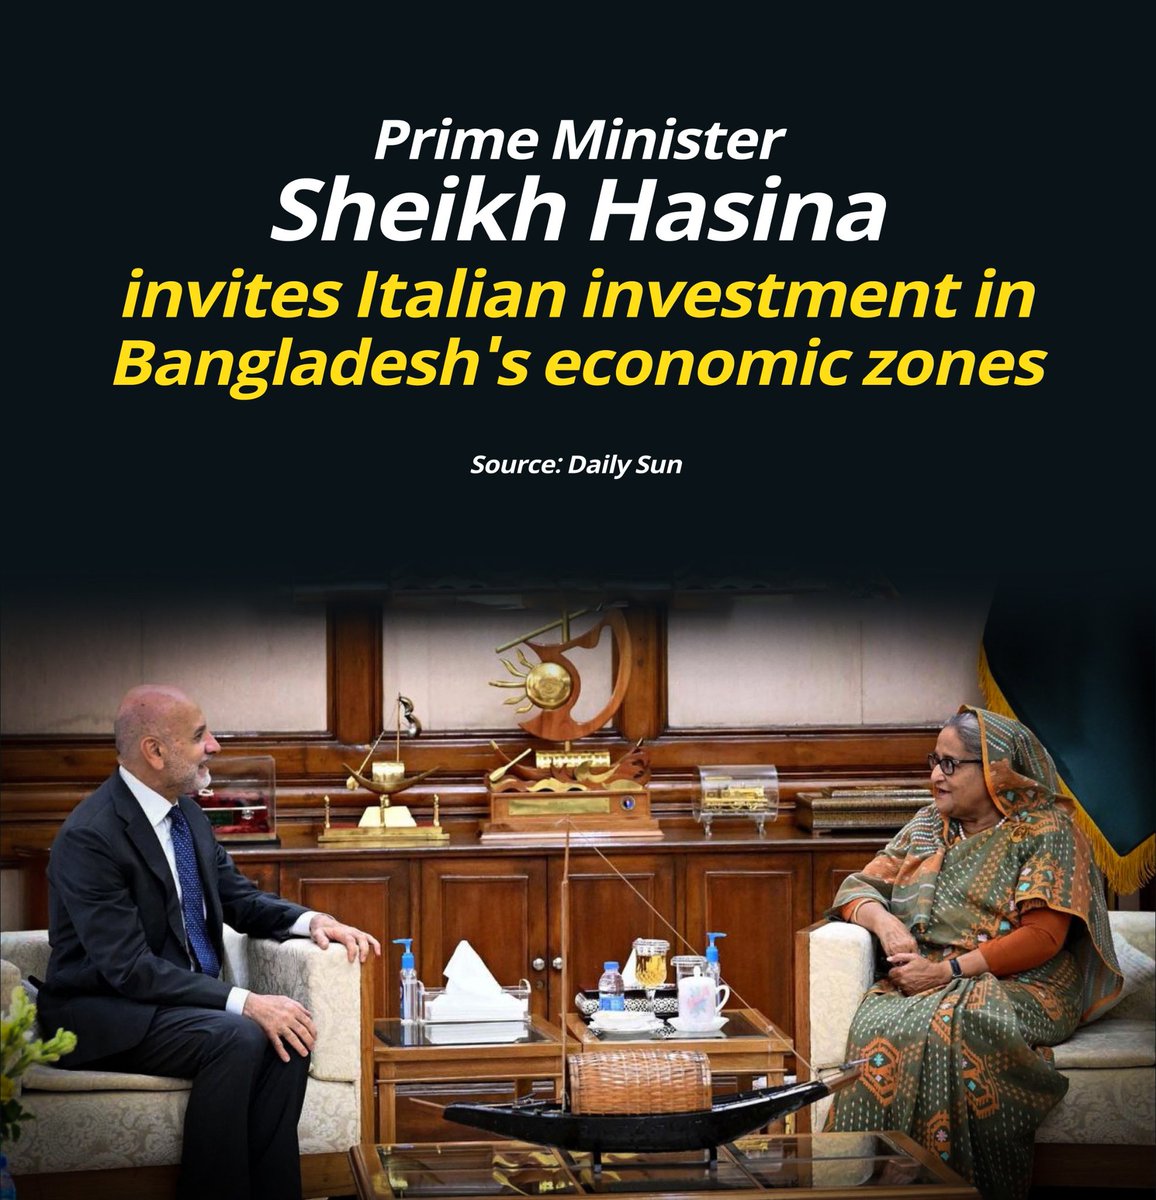 Prime Minister Sheikh Hasina
invites Italian investment in
Bangladesh's economic zones.
@albd1971 @DrHasanMahmud62 @trash_italiano @ItalyMFA @euronewsit @G7 @bepza @beza #Bangladesh #exculsive_econimic_zones